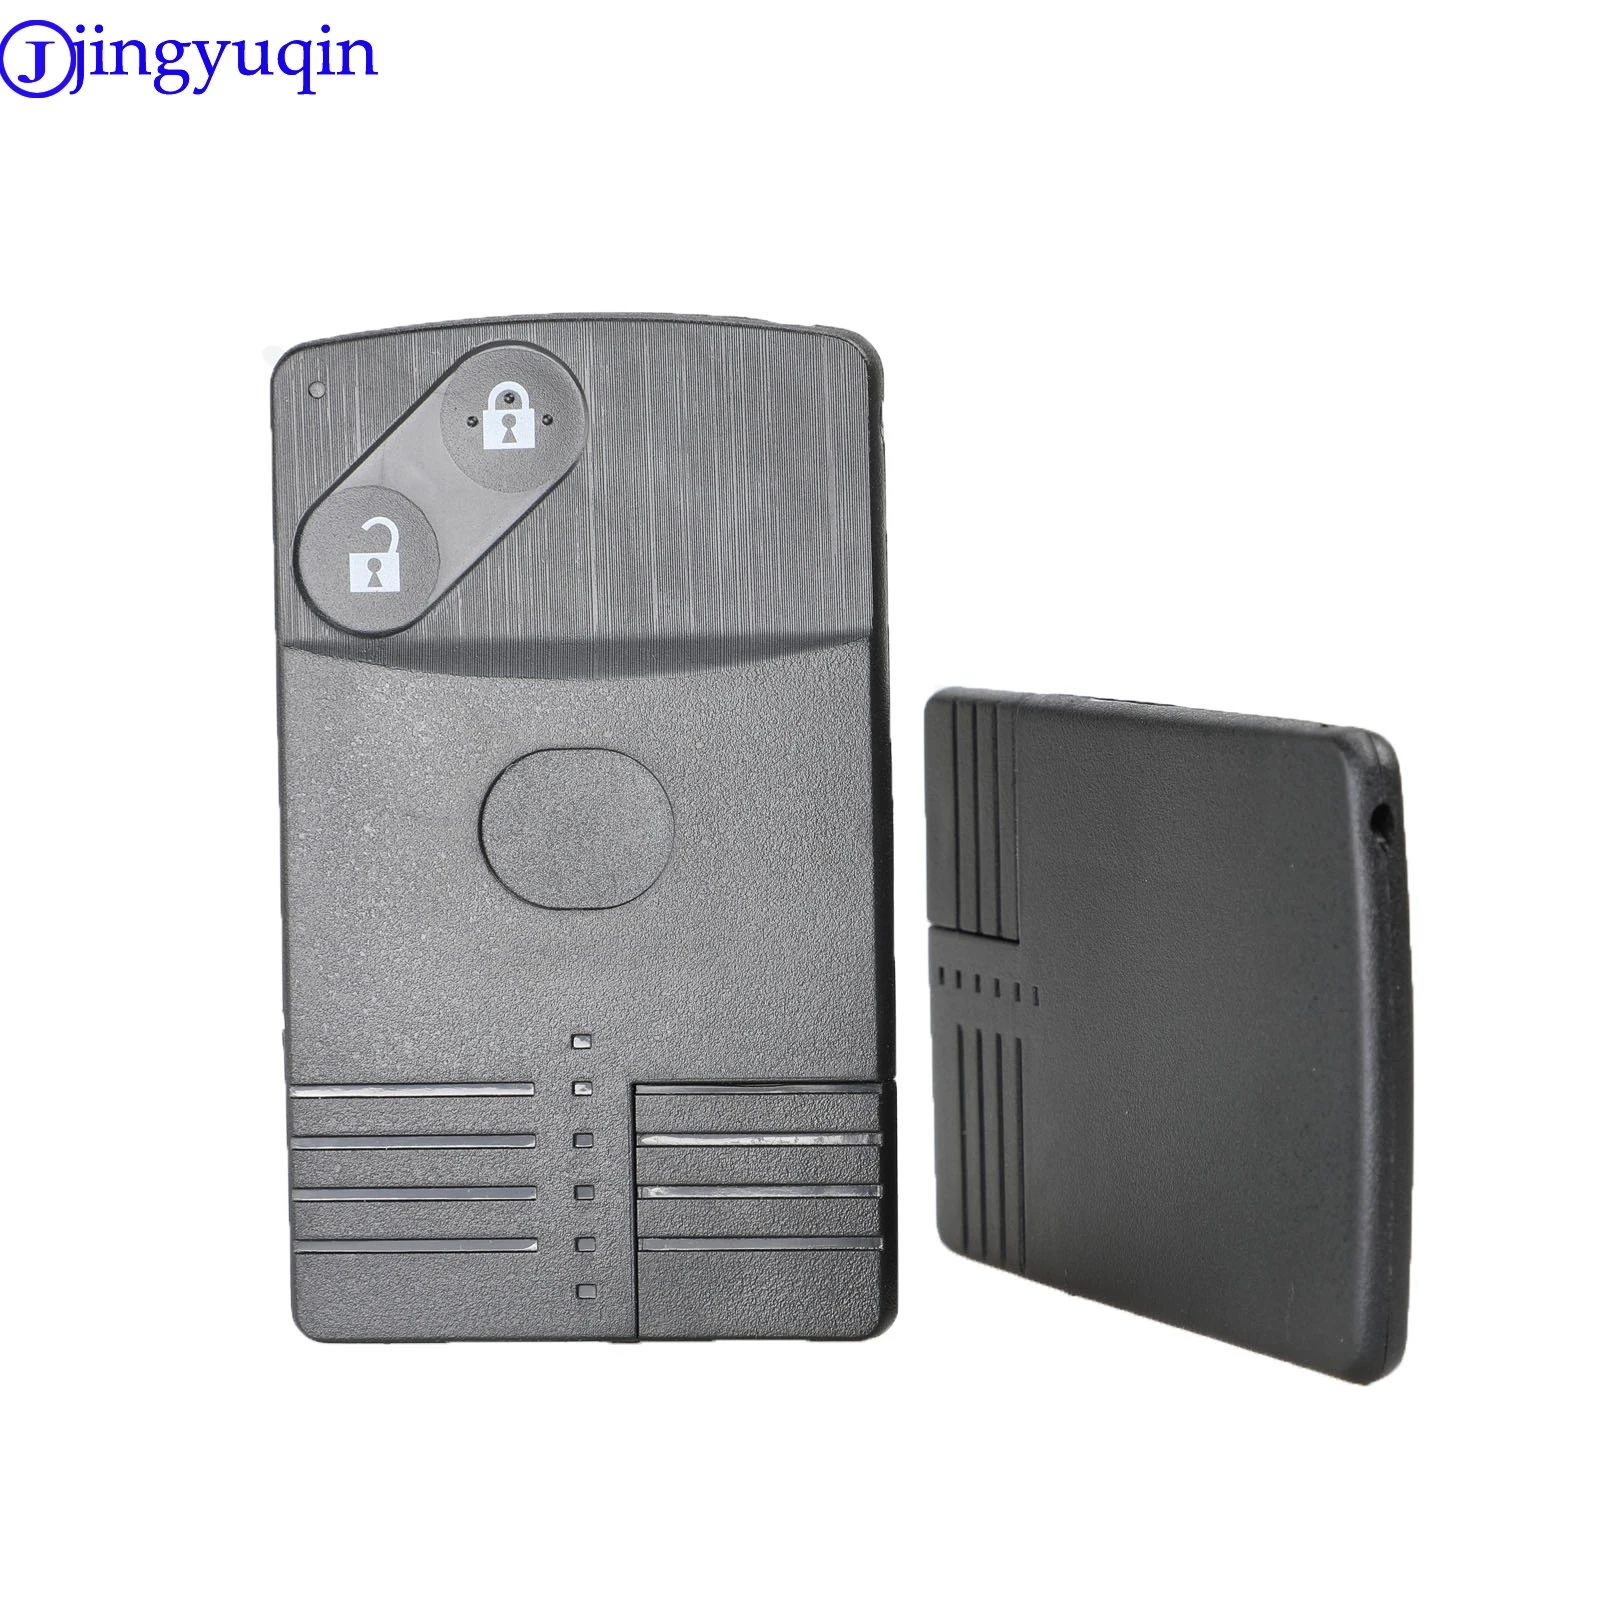 jingyuqin 2b Folding Flip Remote Car Key Shell Cover For Mazda 5 6 8 M8 CX-7 CX-9 Smart Key Card